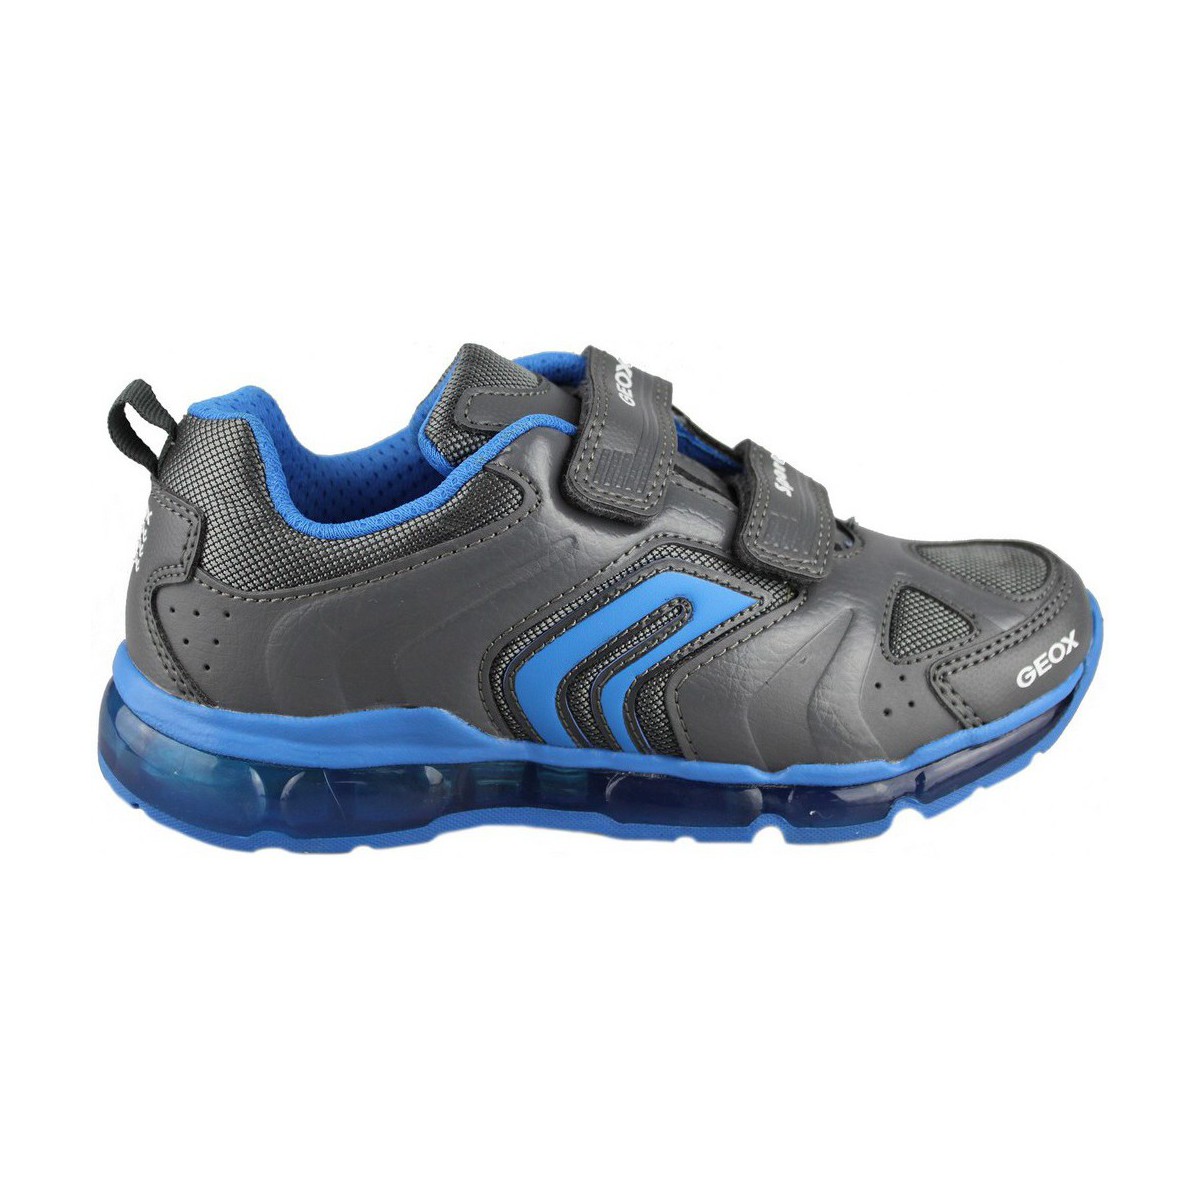 Schuhe Kinder Sneaker Low Geox ANDROID B.D. Blau